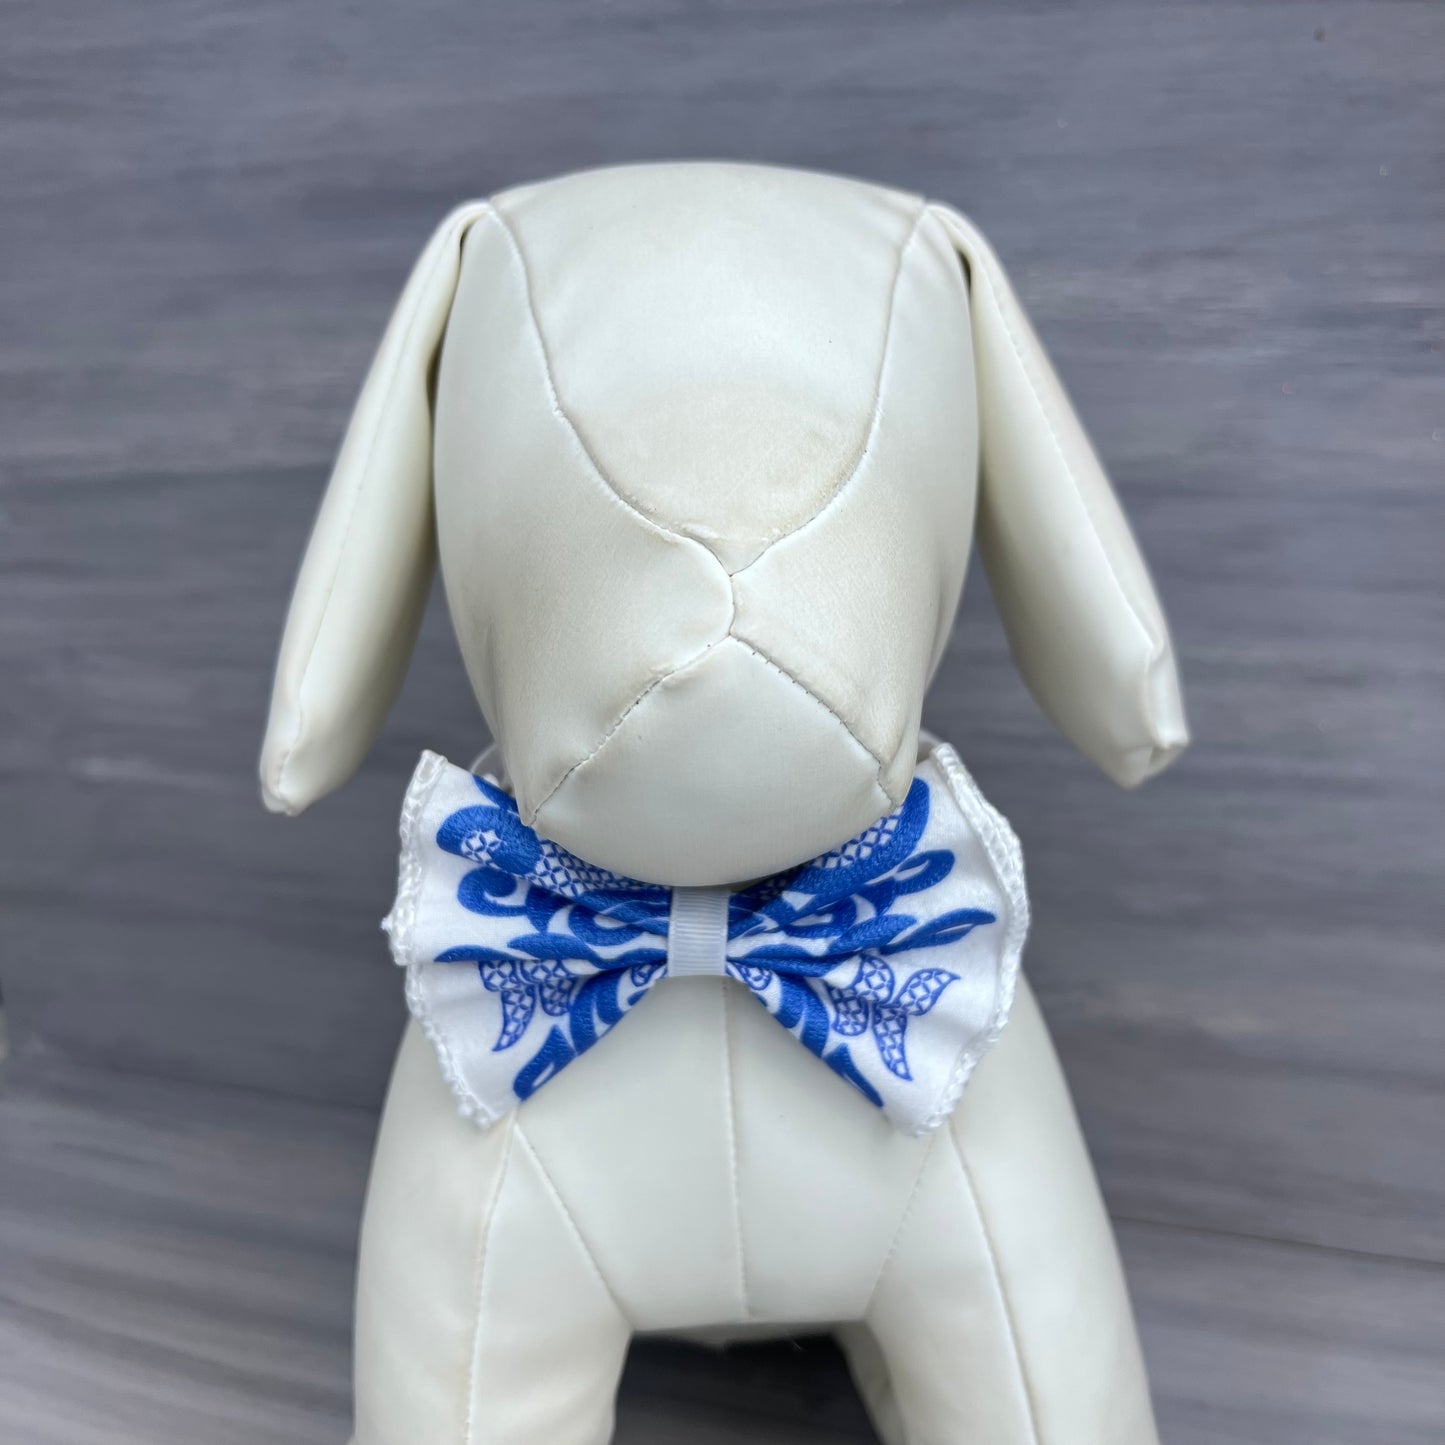 Blue Skies - Jumbo Bow Tie Neckwear - 4 Large Neckties